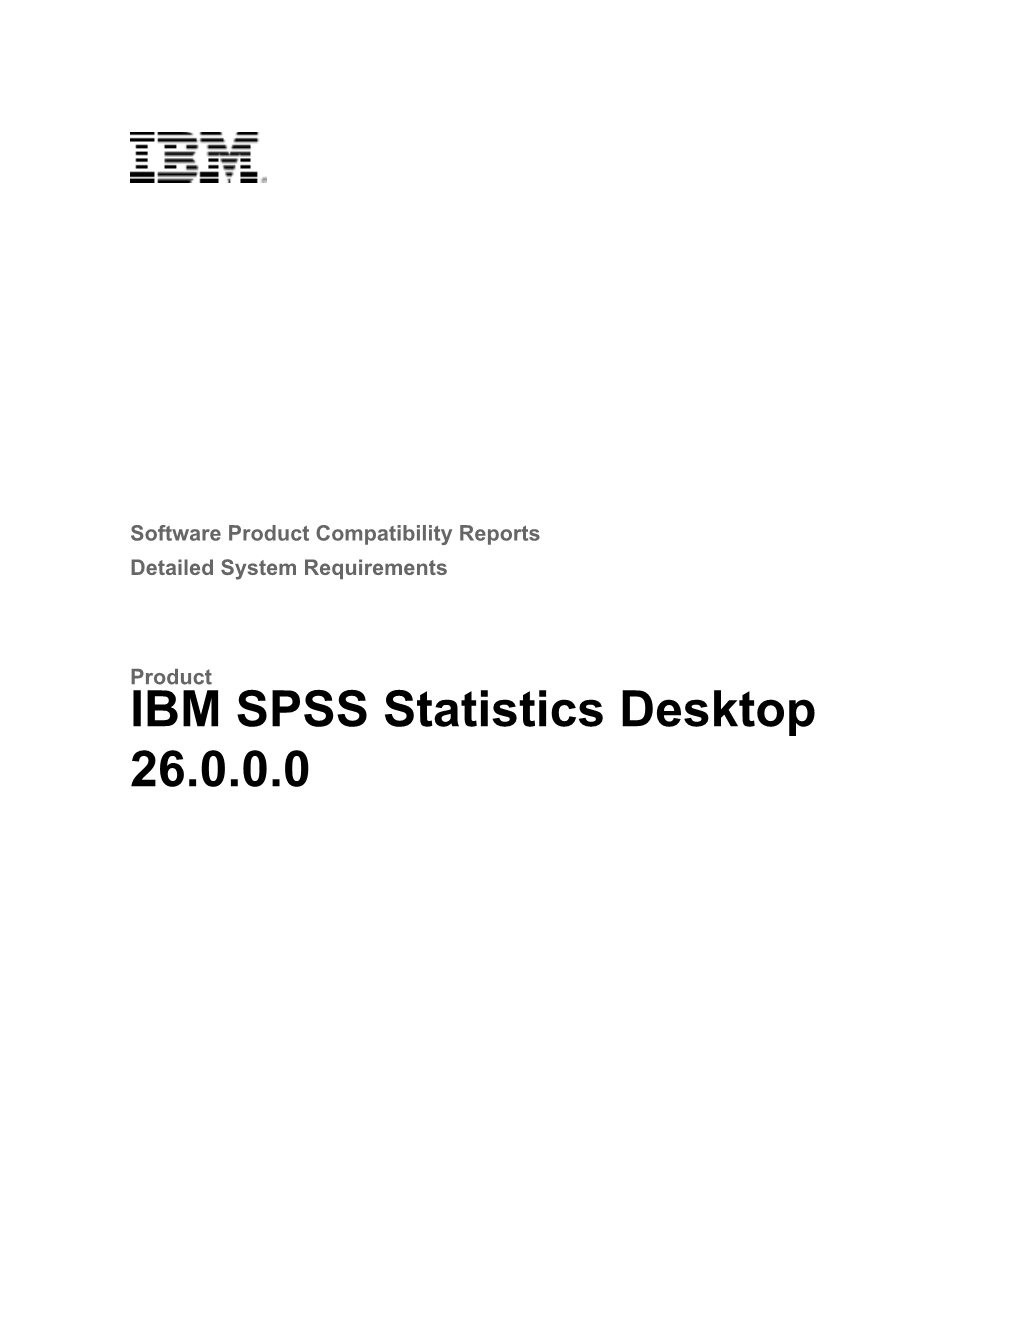 IBM SPSS Statistics Desktop 26.0.0.0 IBM SPSS Statistics Desktop 26.0.0.0 Detailed System Requirements